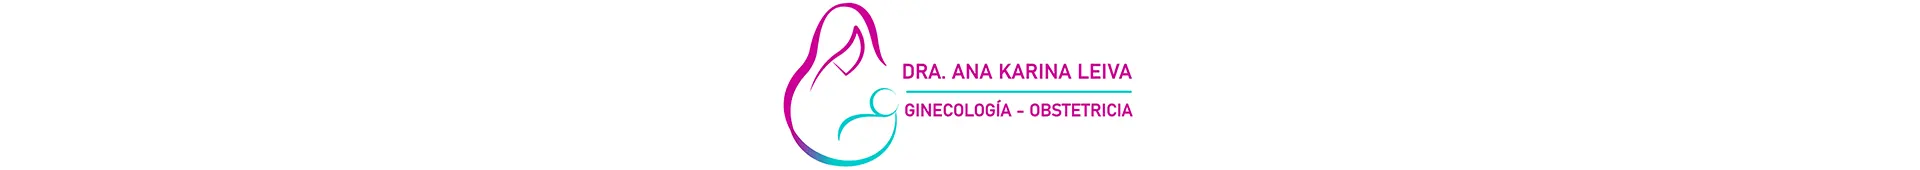 Imagen 1 del perfil de Dra. Ana Karina Leiva